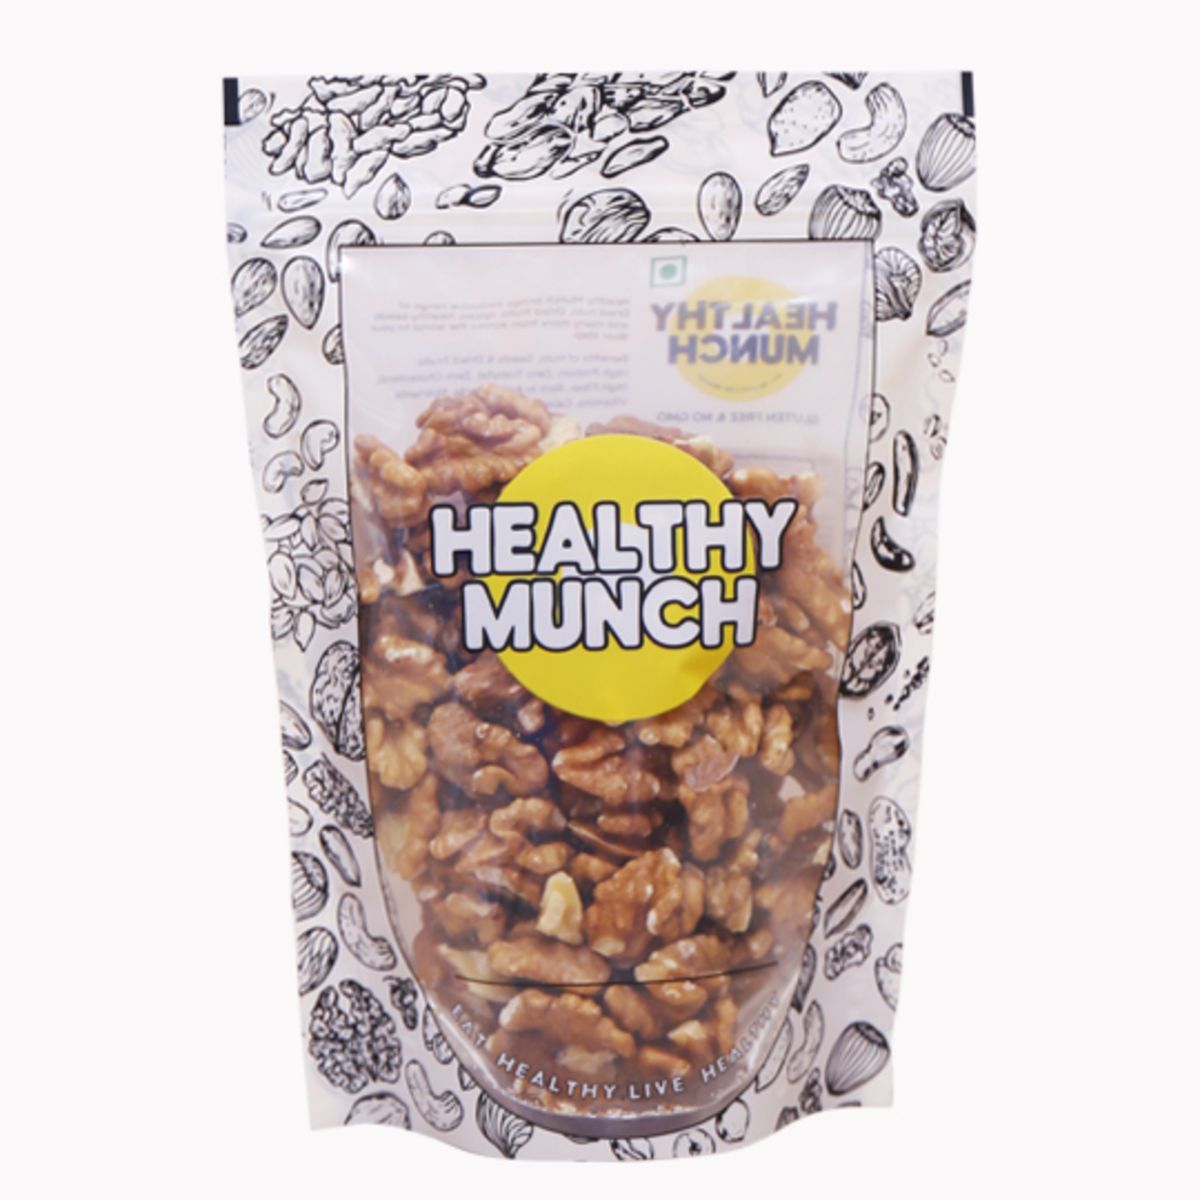 Buy Healthy Munch Walnut Kernels (Light Halves) 200 gms at Best Price Online